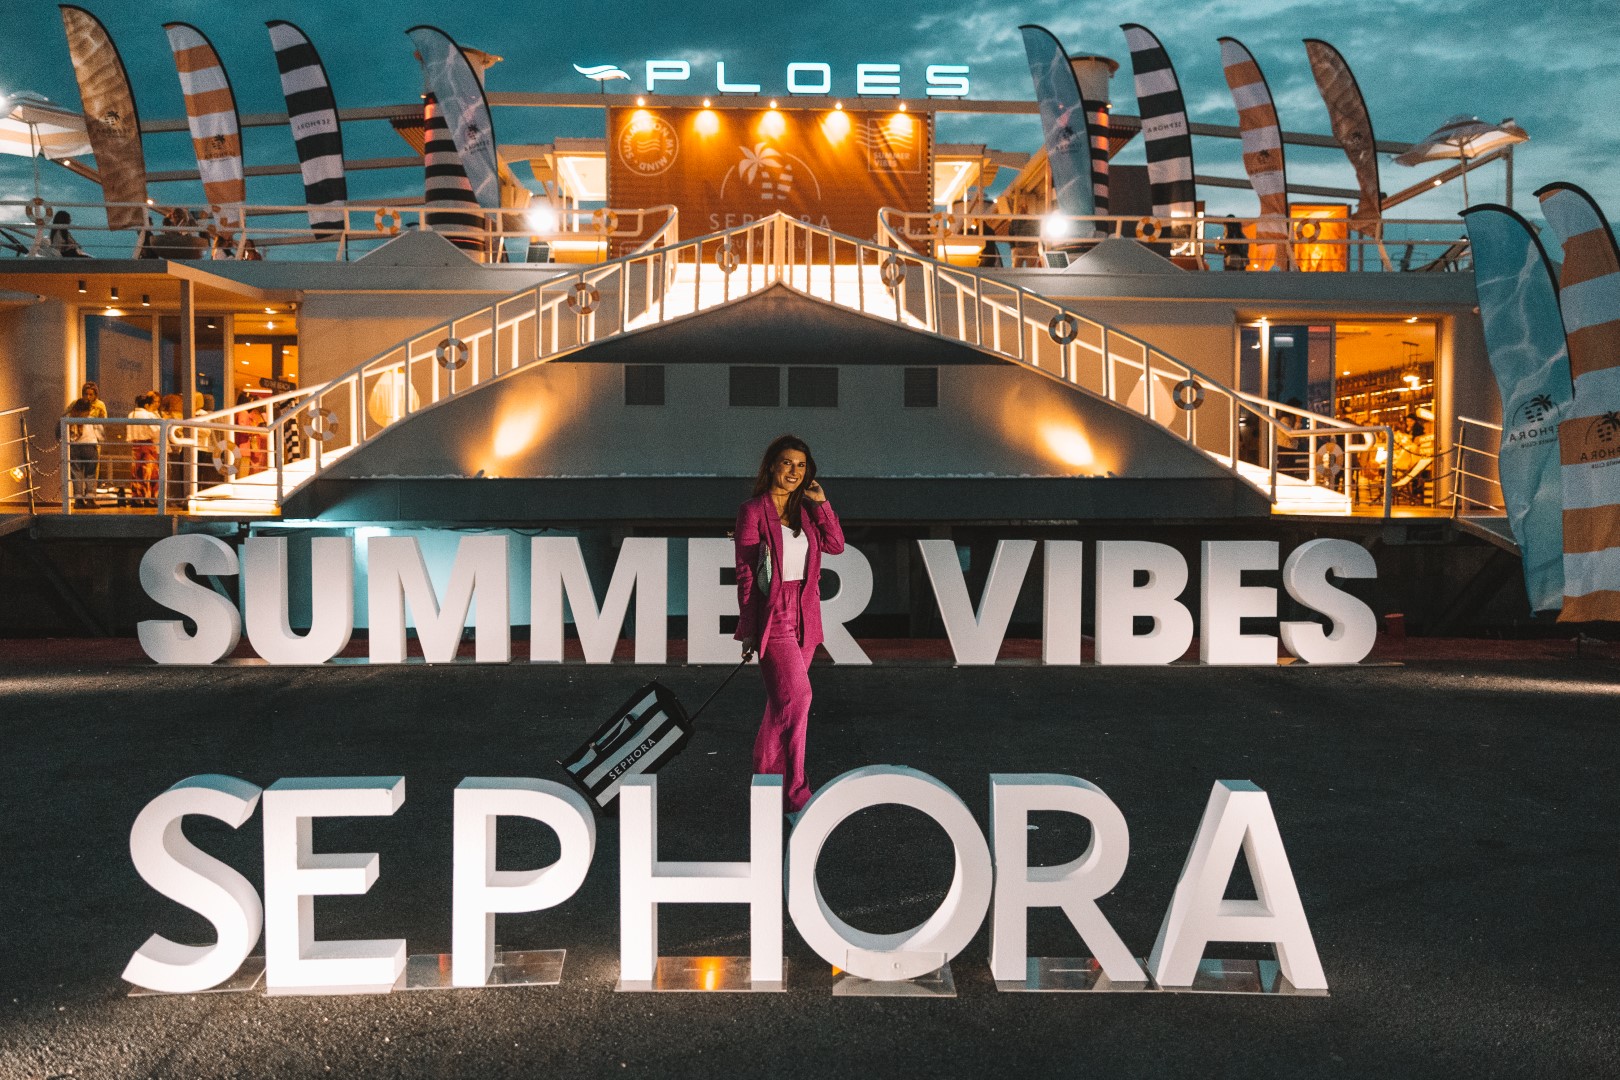 Sephora Summer Vibes: το καθιερωμένο party της Sephora κήρυξε την έναρξη του καλοκαιριού